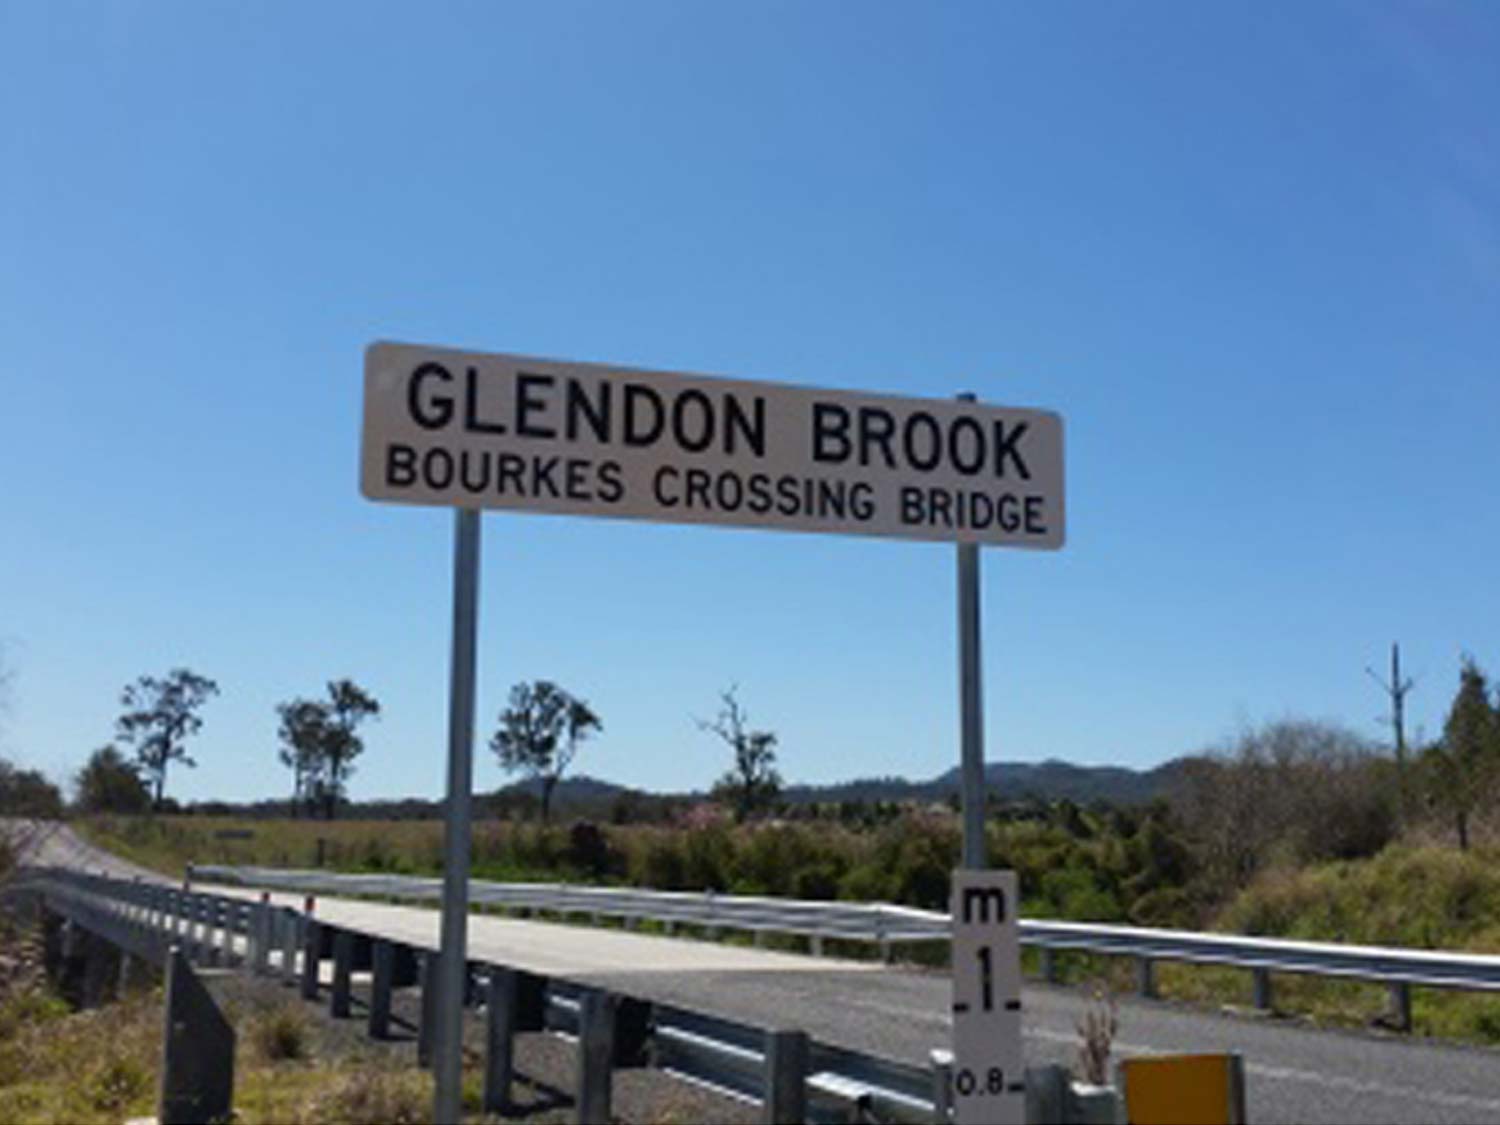 Bourkes Crossing Bridge